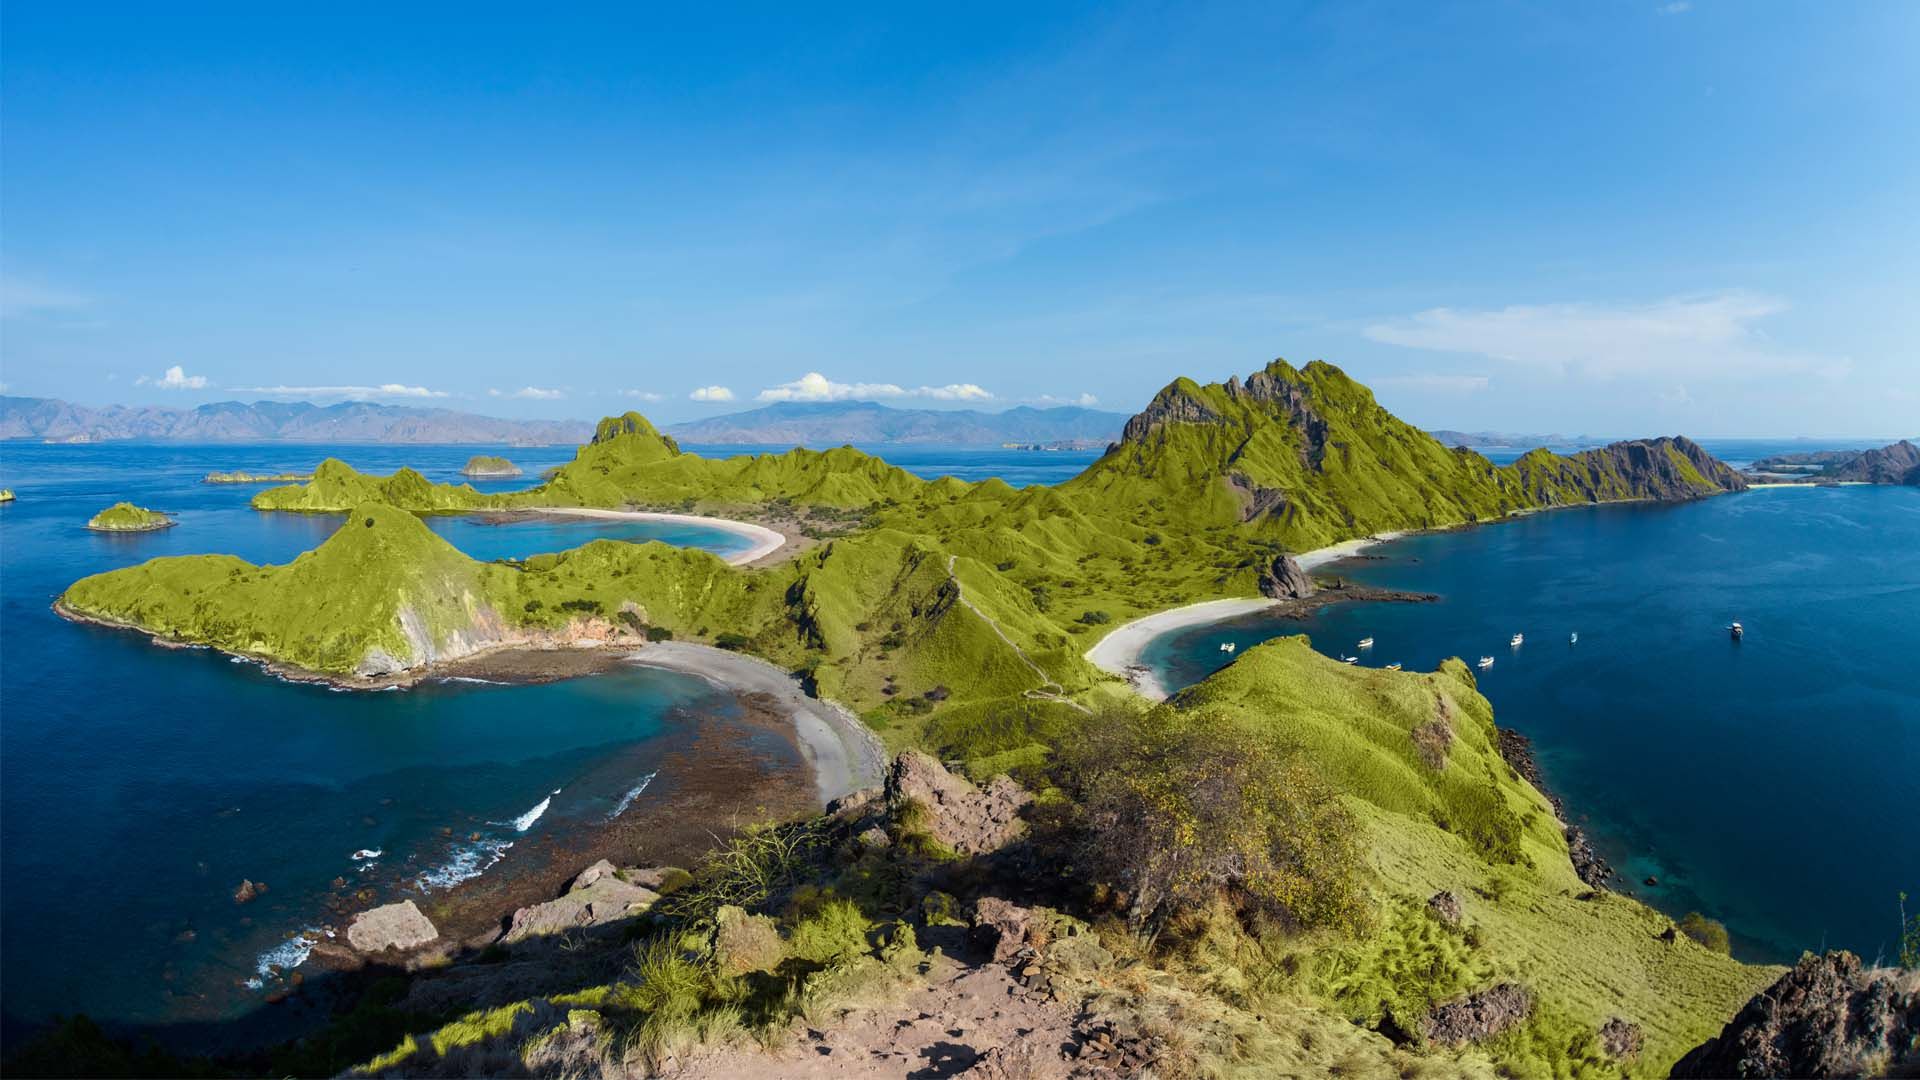 Enjoy Visit Komodo Island Island Tour From Bali